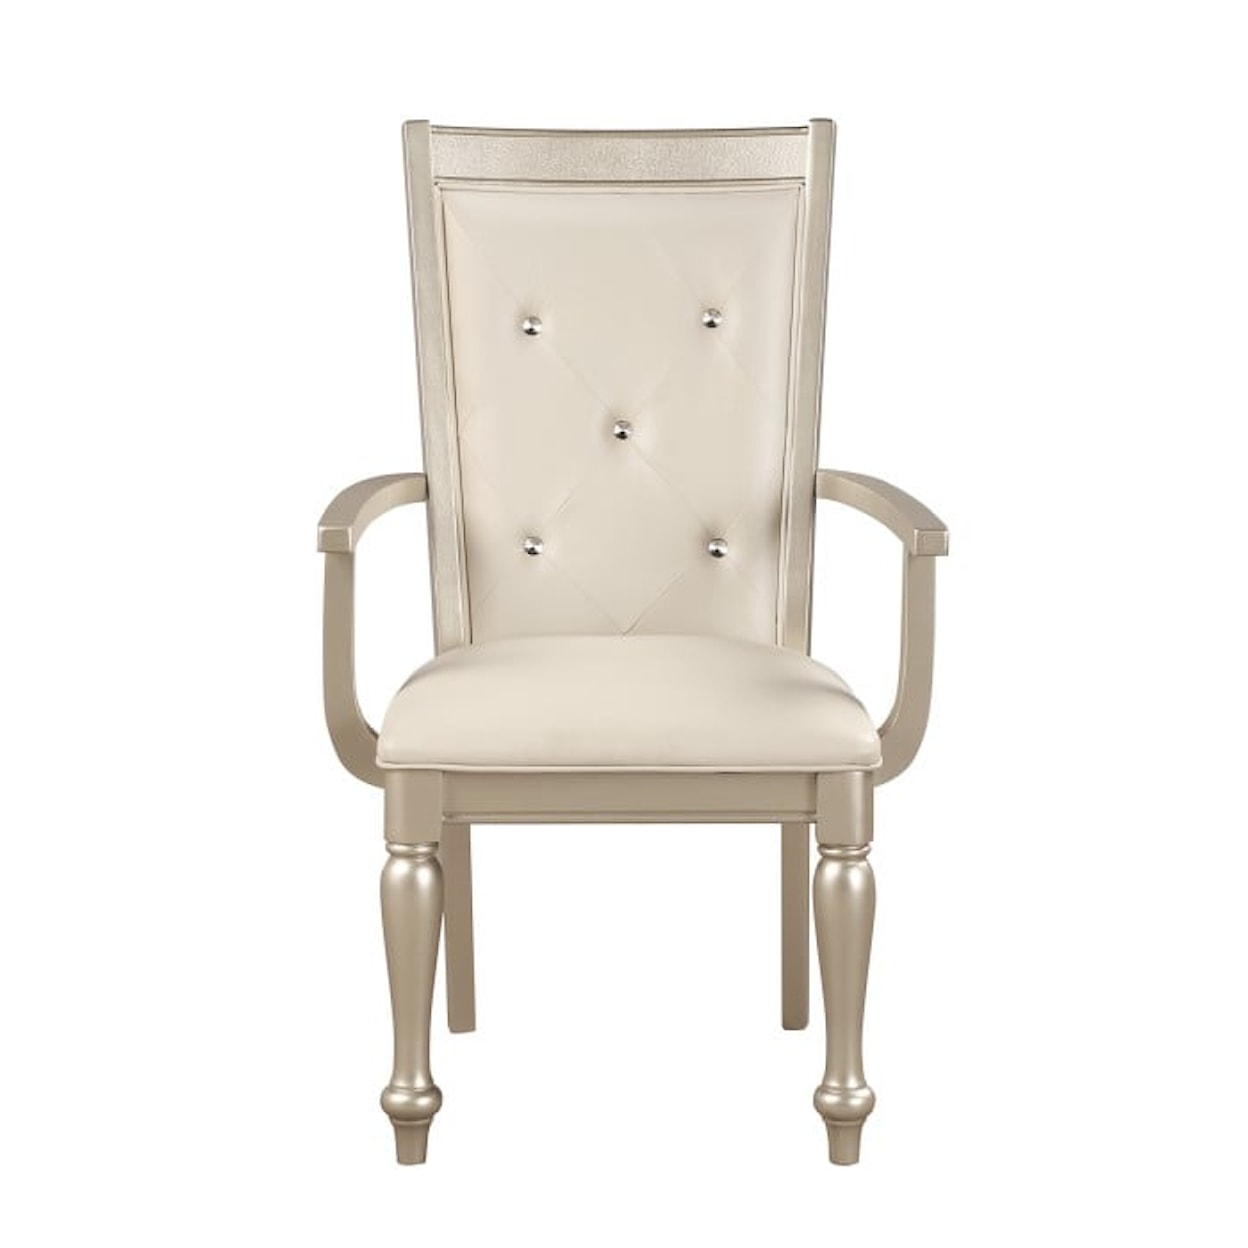 Homelegance Celandine Arm Chair